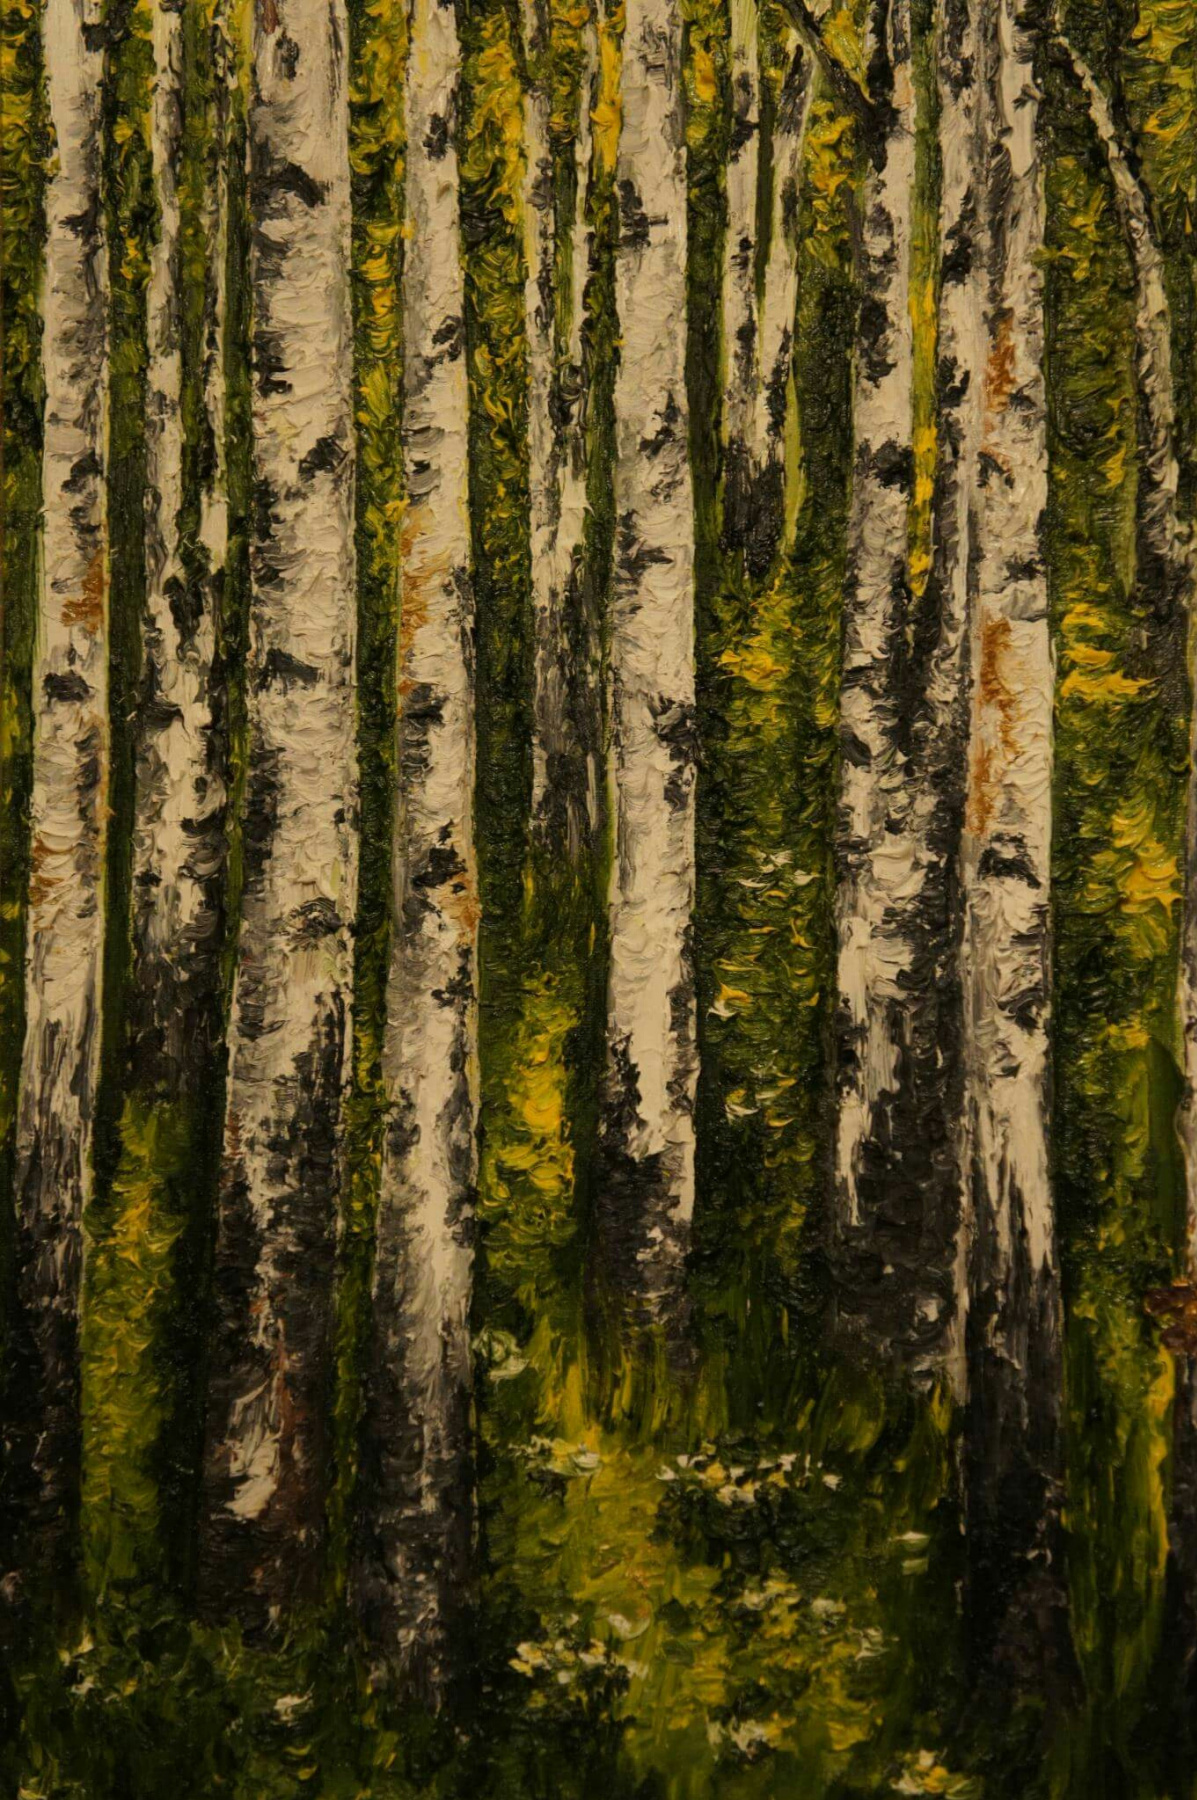 Birch grove. Березы живопись. Картина "береза". Фон березовый лес картина.